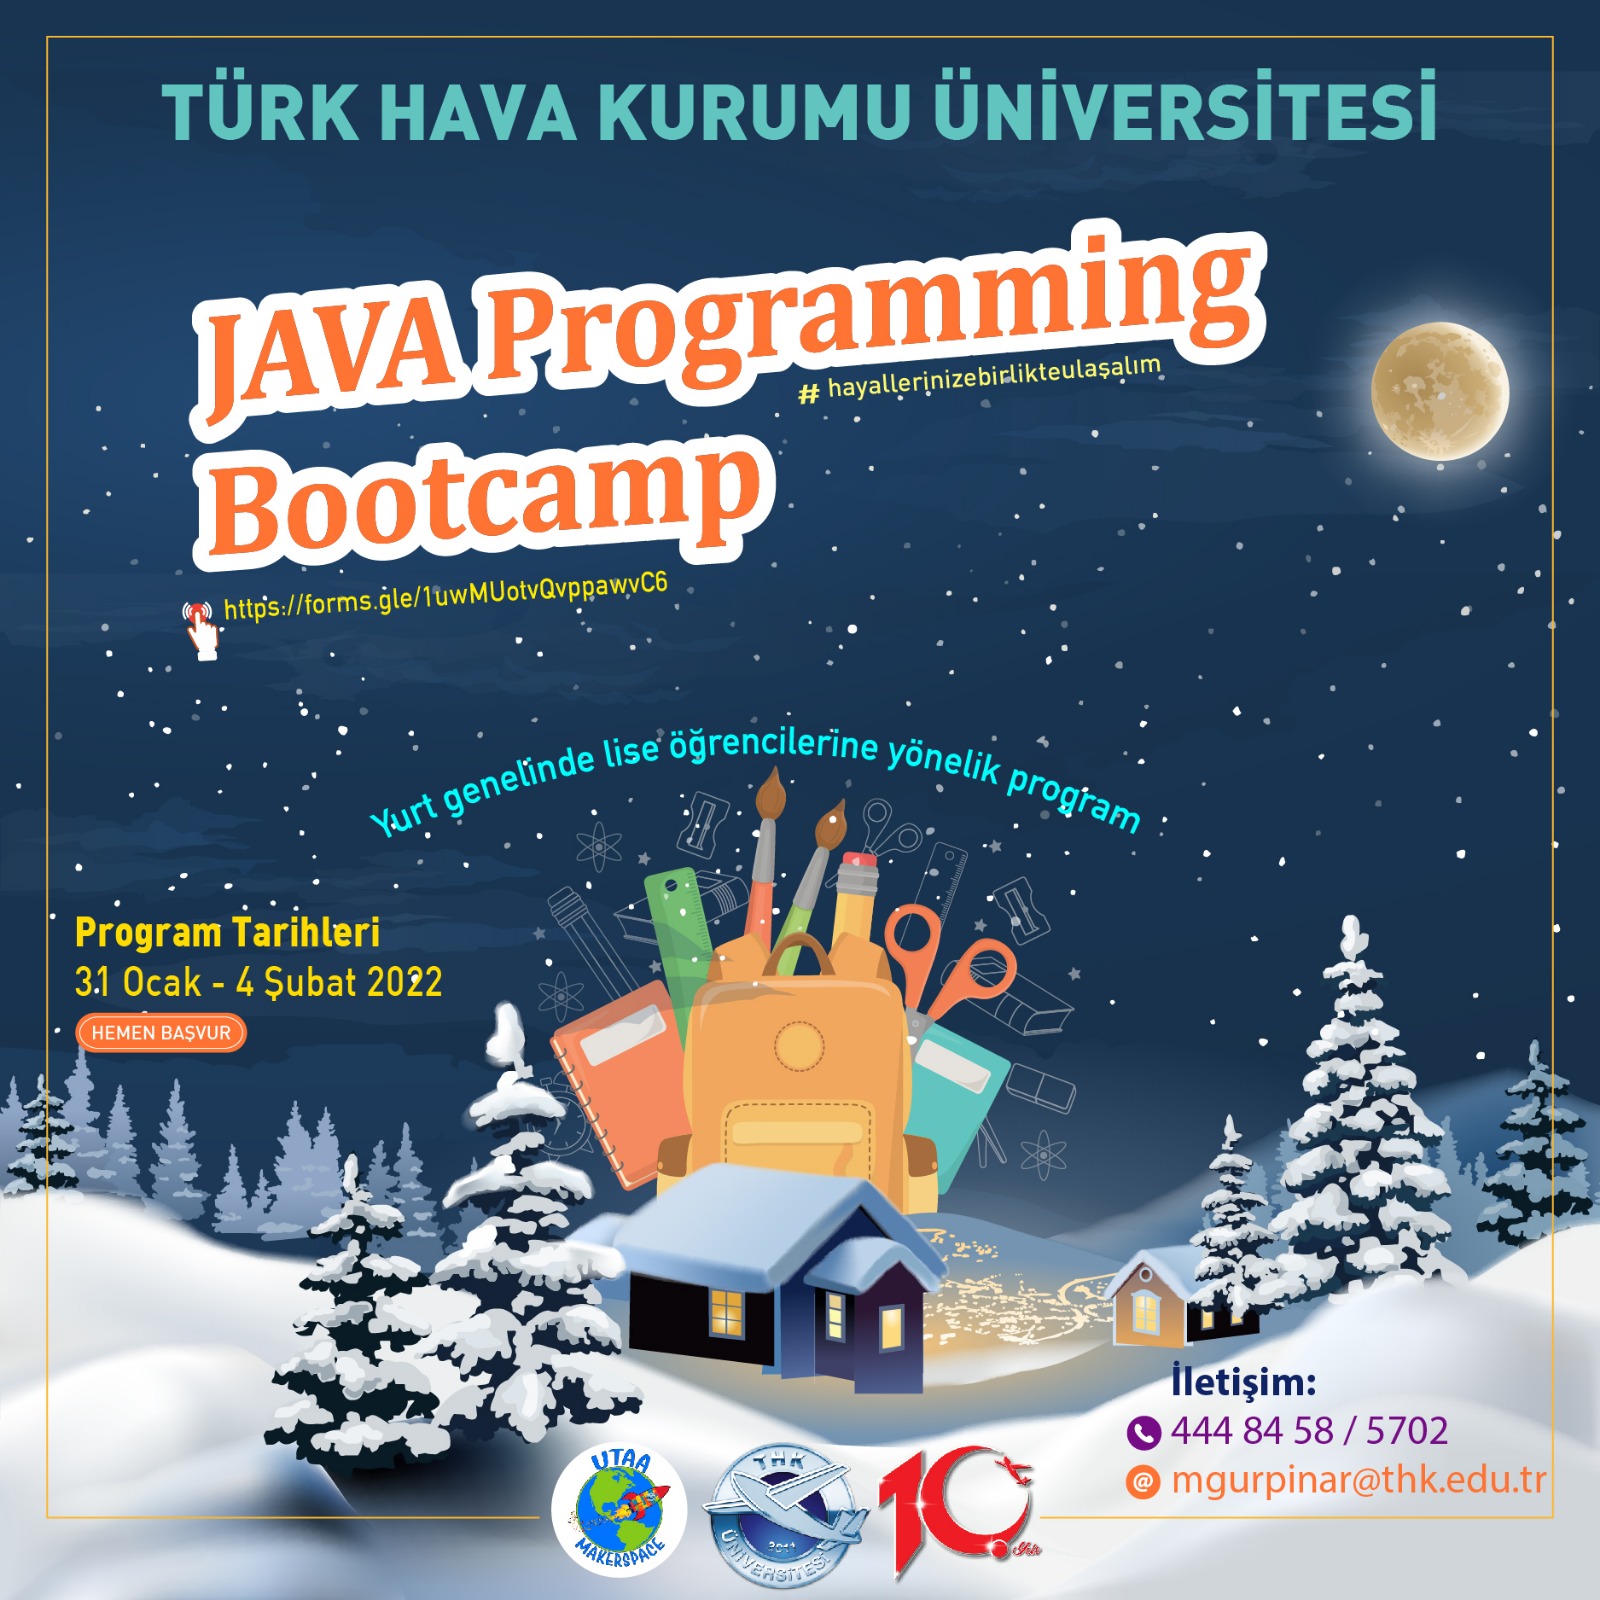 Çevrimiçi “Java Programming Bootcamp” Eğitimi